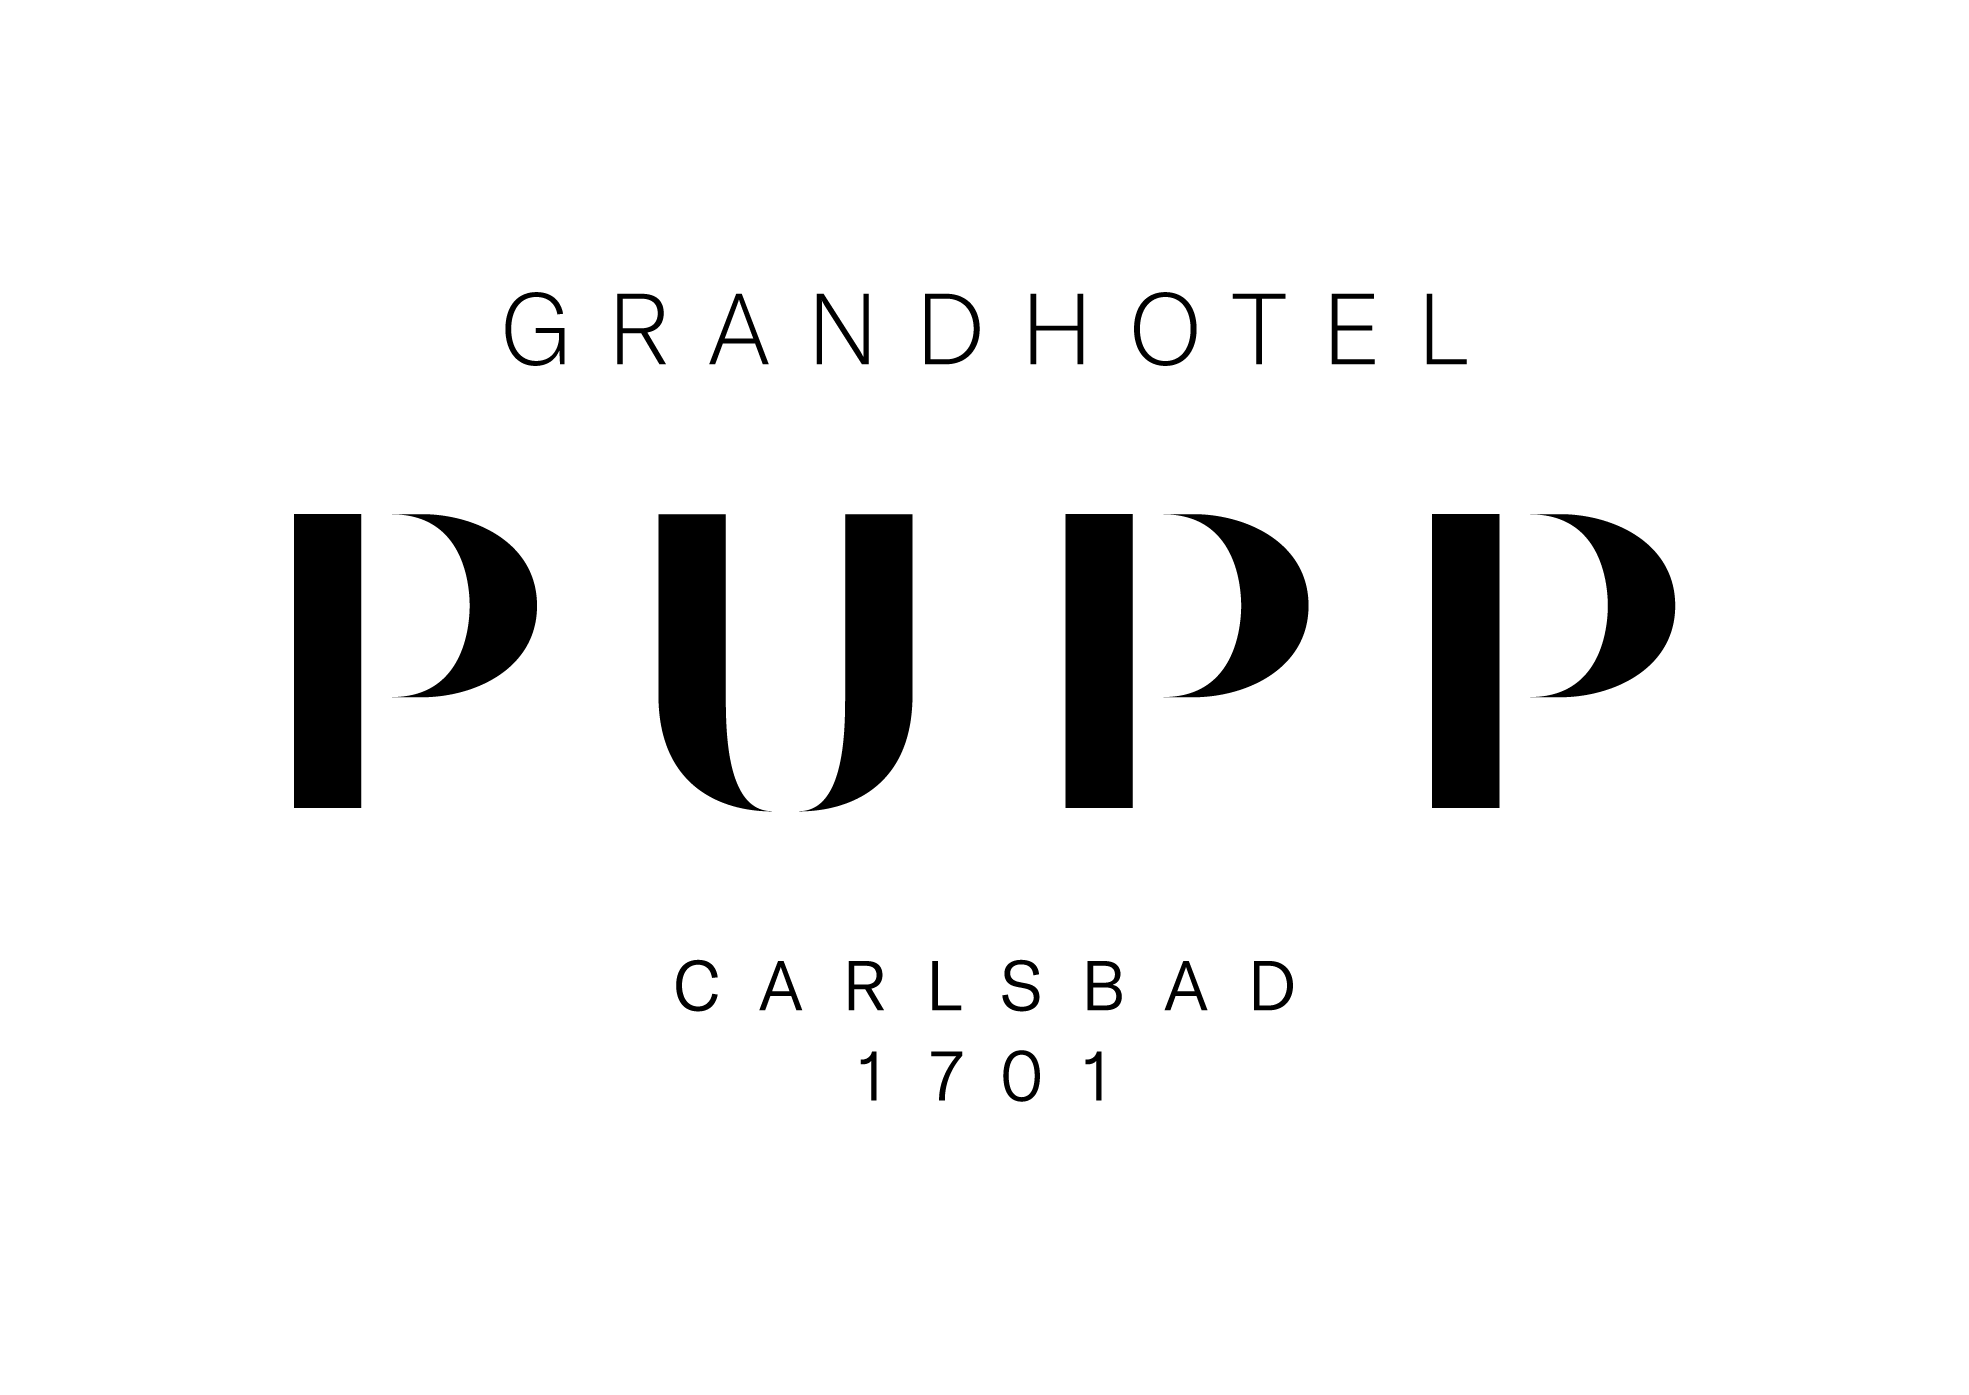 nahled_pupp_grandhotel_bw.png (35 KB)